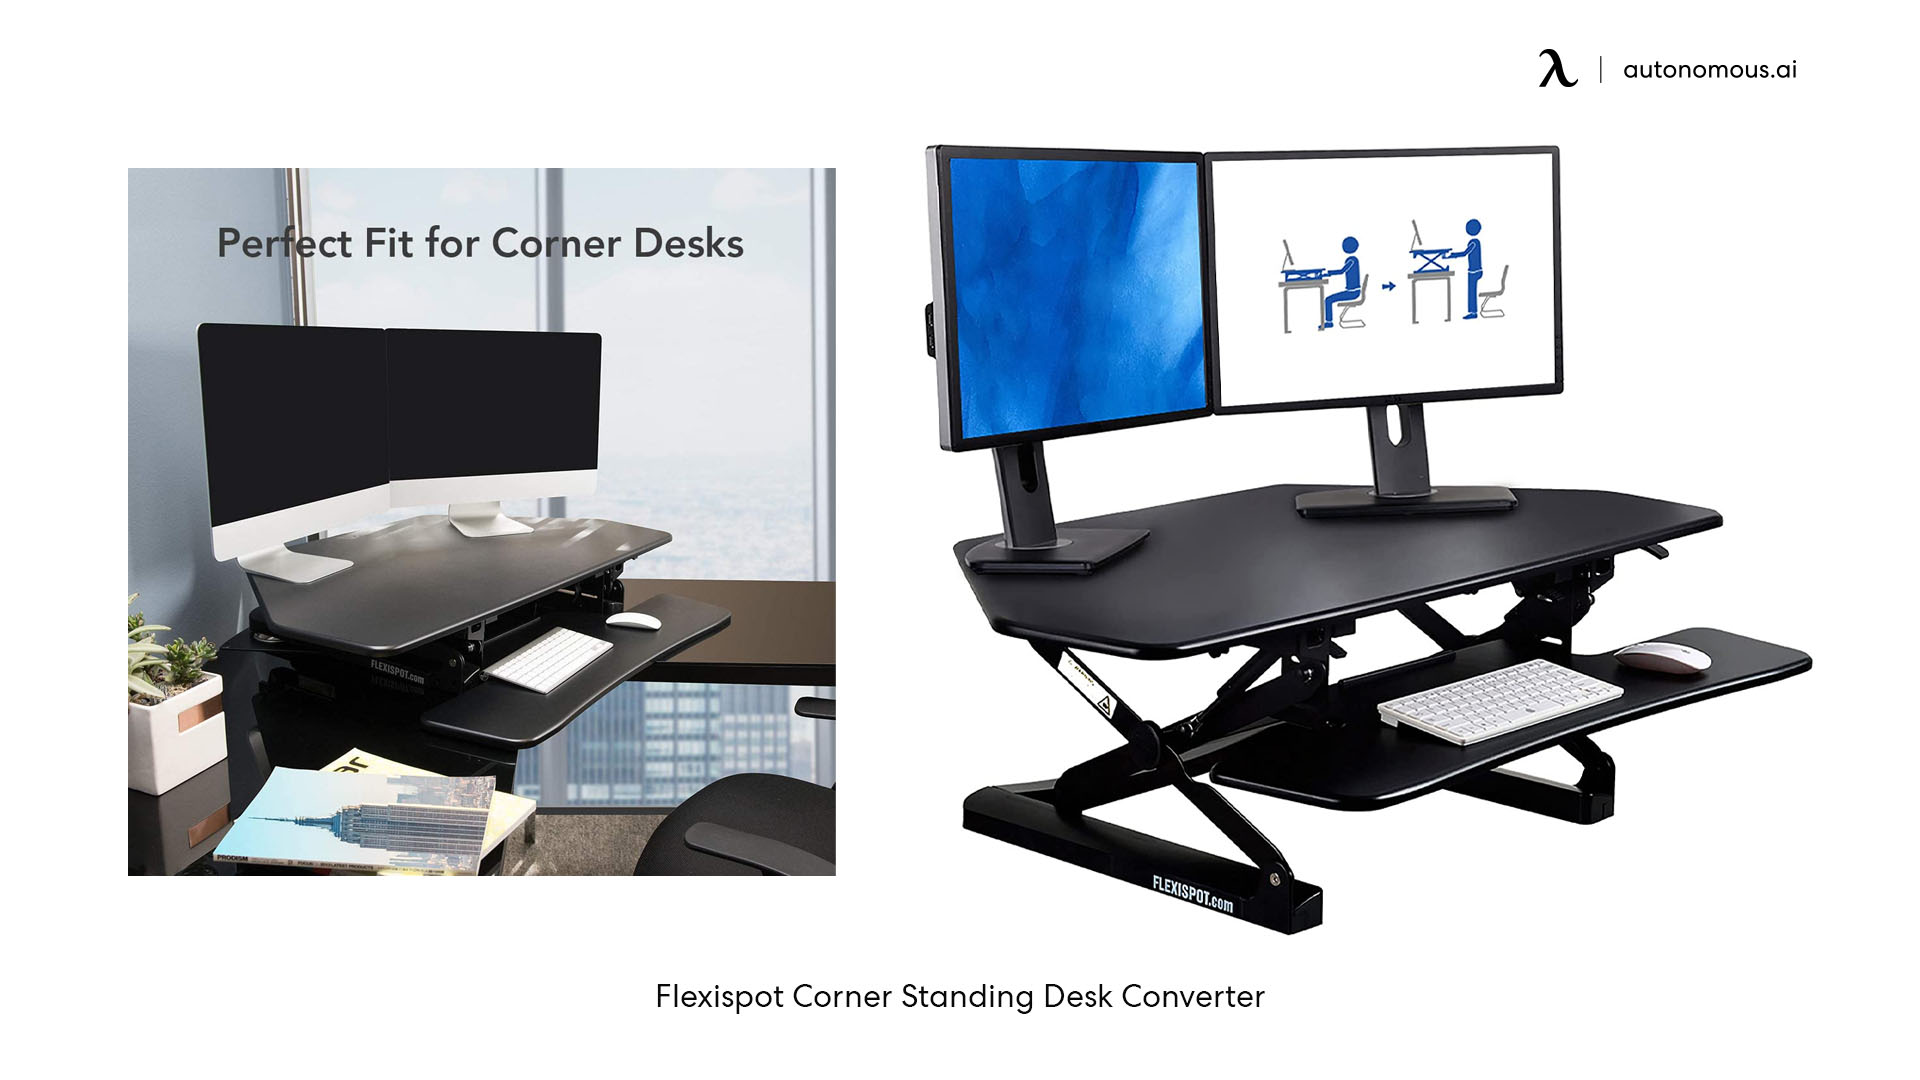 Flexispot adjustable standing desk converter